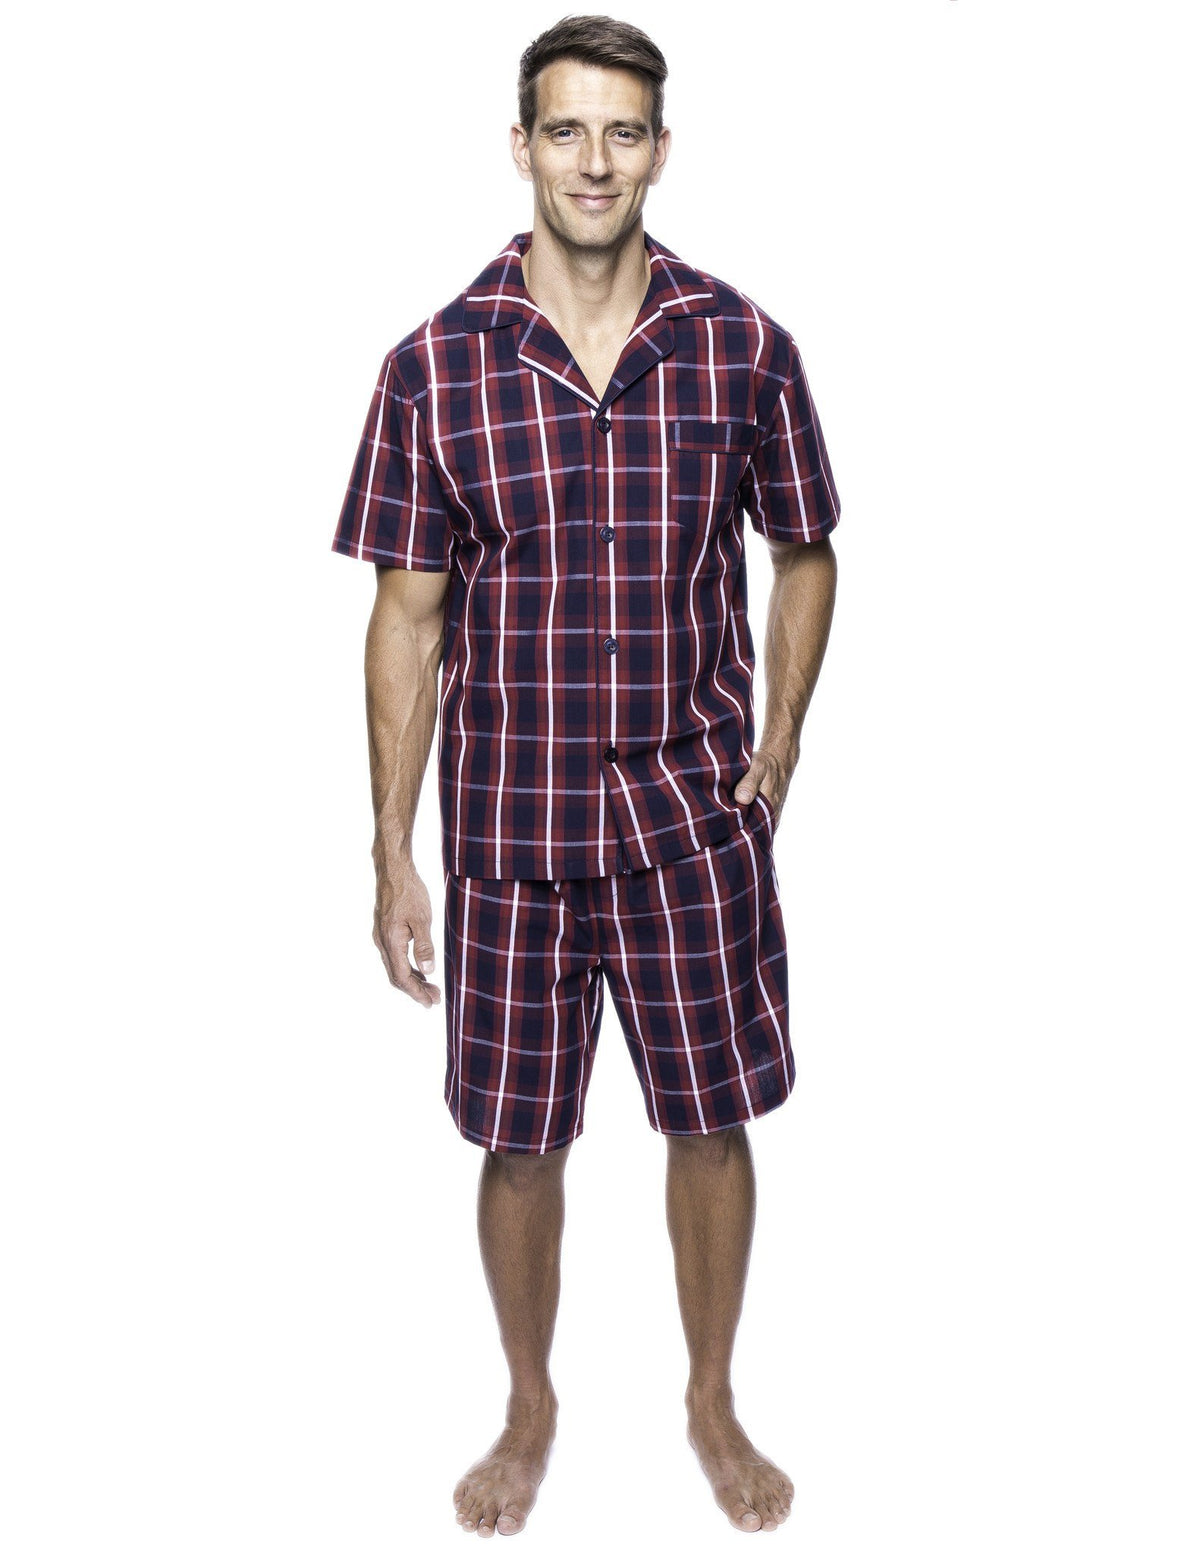 Men's 100% Woven Cotton Short Pajama Sleepwear Set - Patriotic Plaid